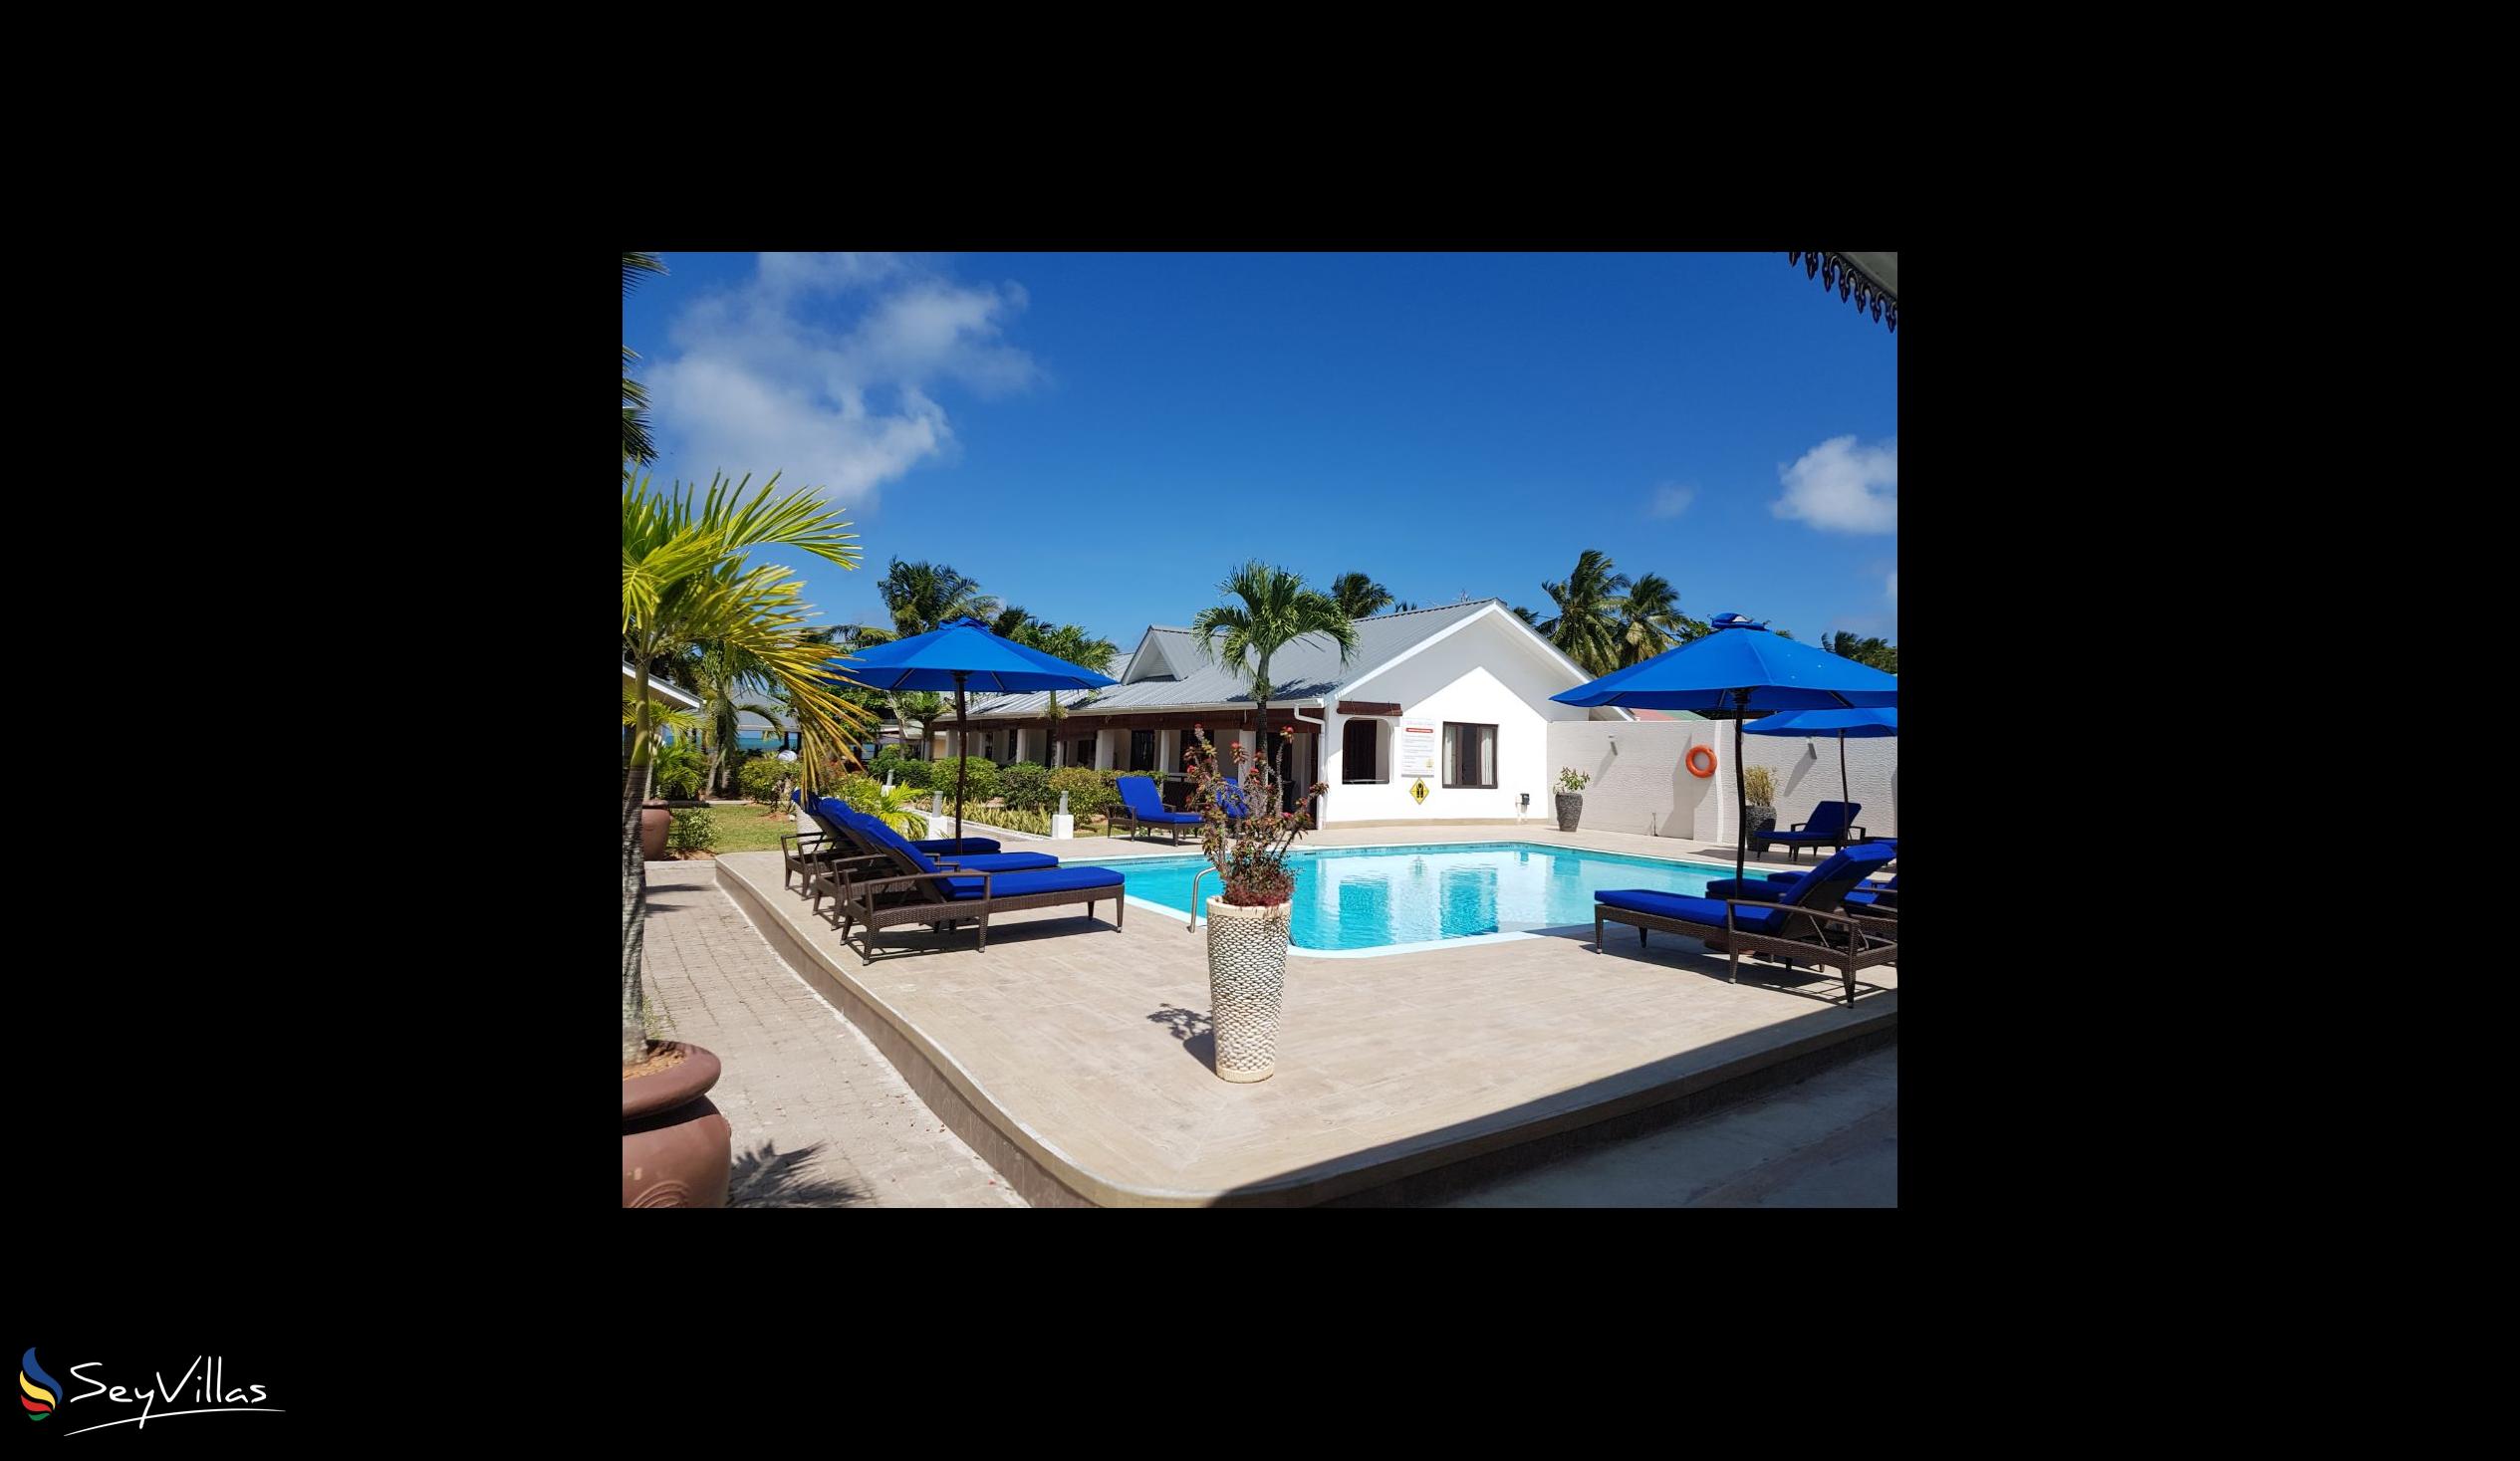 Foto 1: Villas de Mer - Aussenbereich - Praslin (Seychellen)